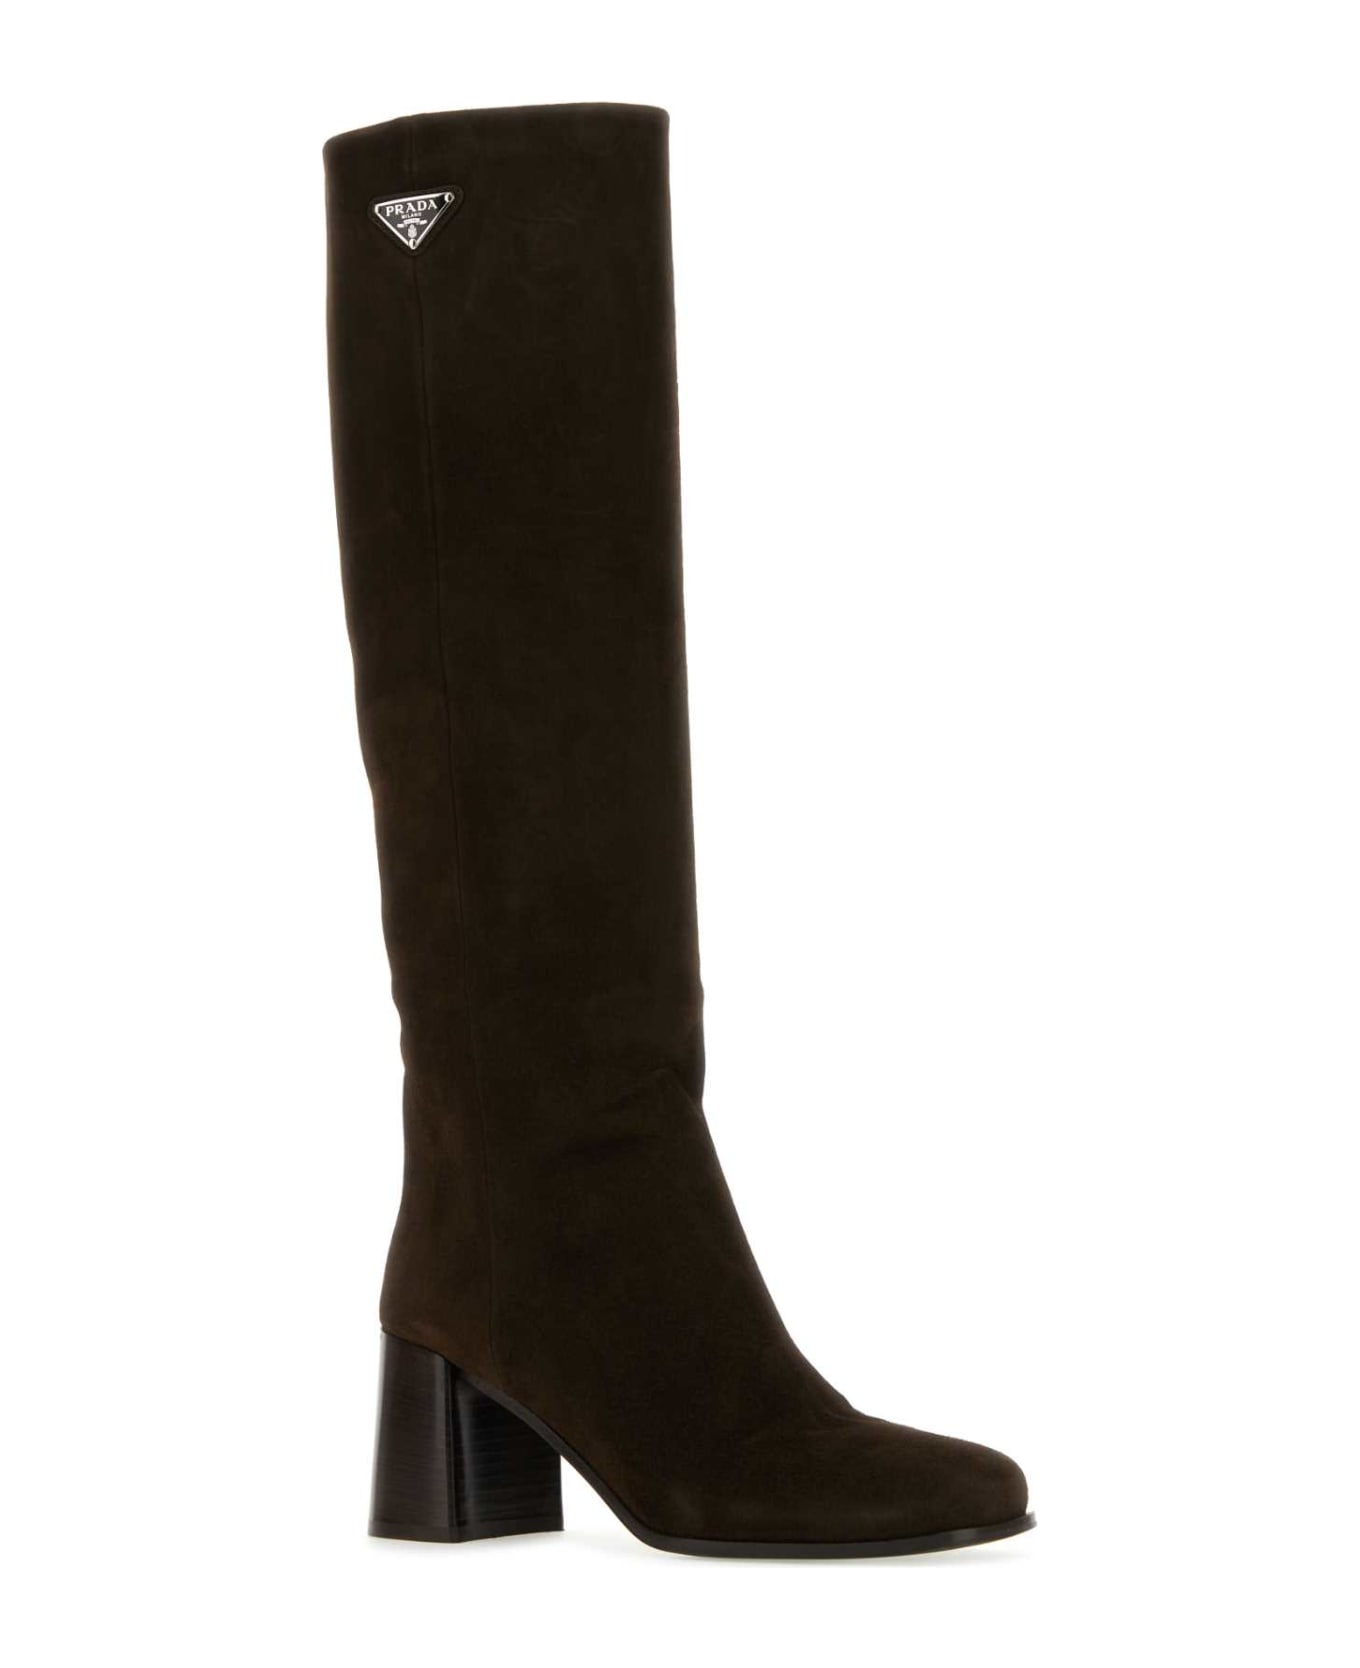 Prada Dark Brown Suede Boots - MORO ブーツ